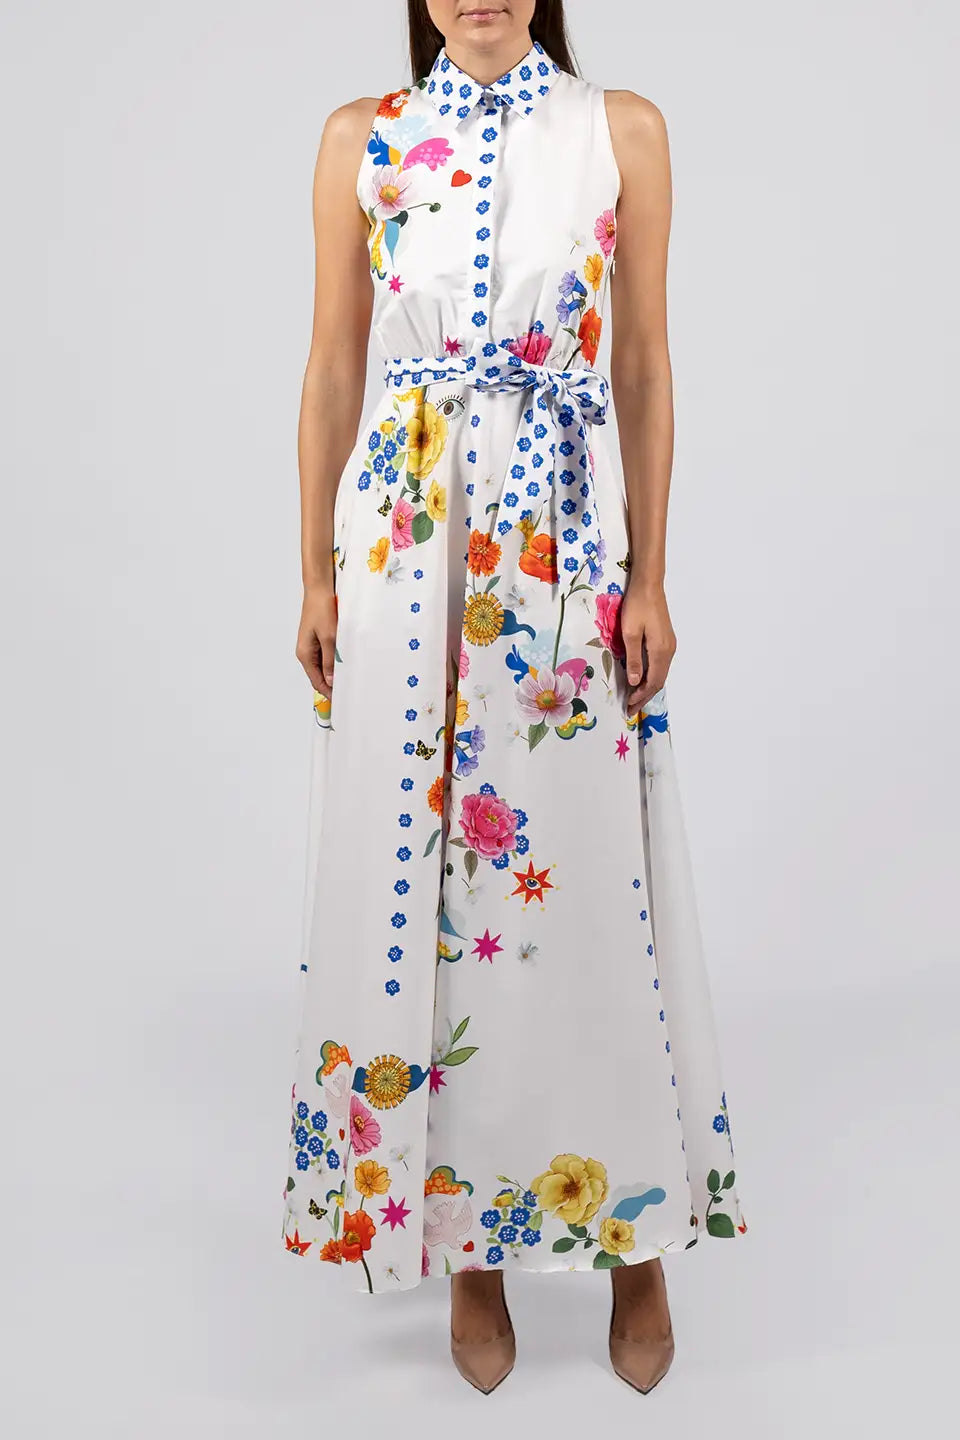 Shop online trendy White Maxi dresses from Borgo de Nor Fashion designer. Product gallery 1